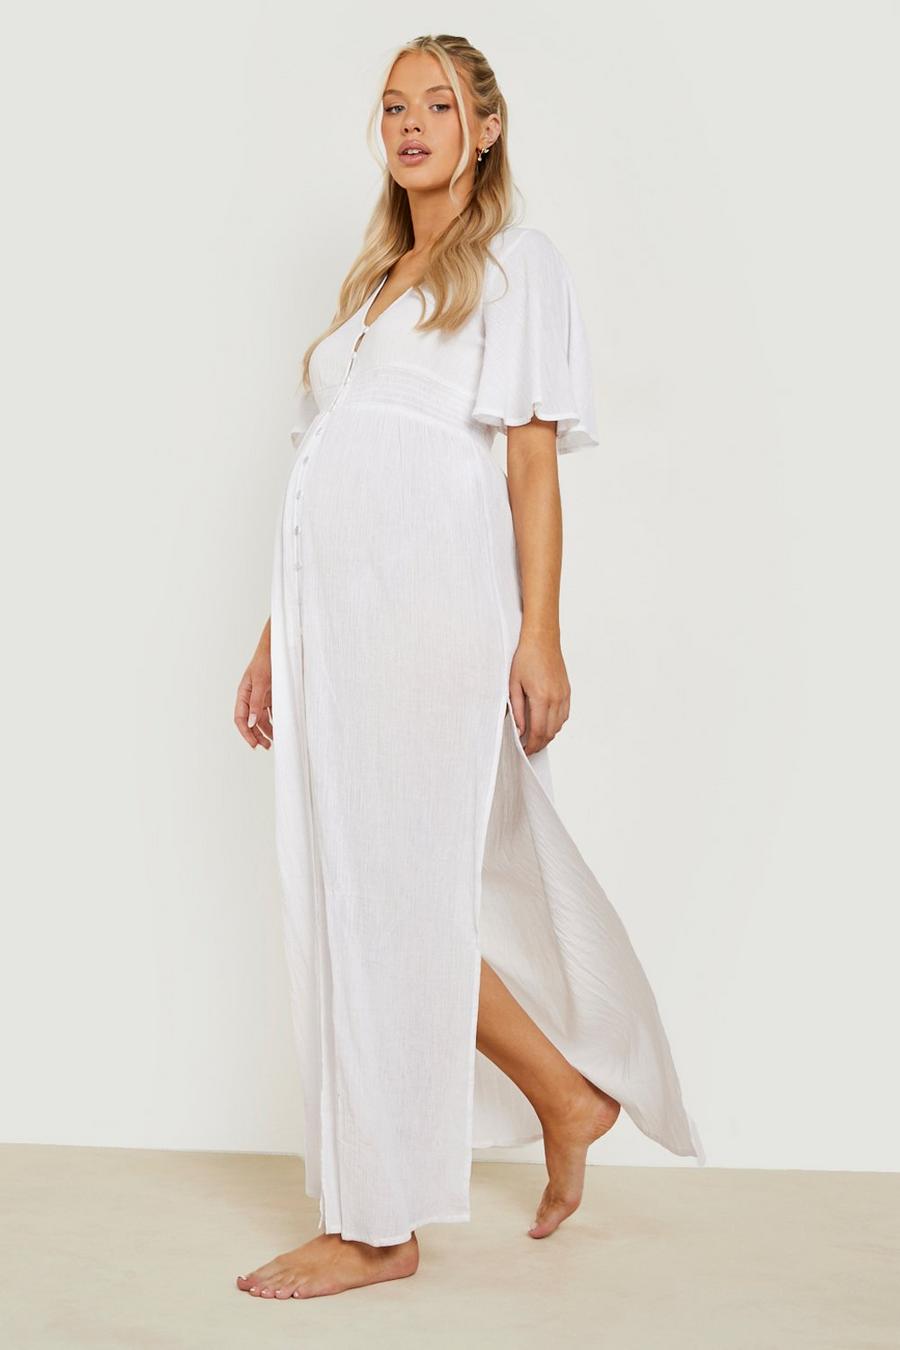 White bianco שמלת מקסי לחוף עם כיווצים במותניים, להיריון